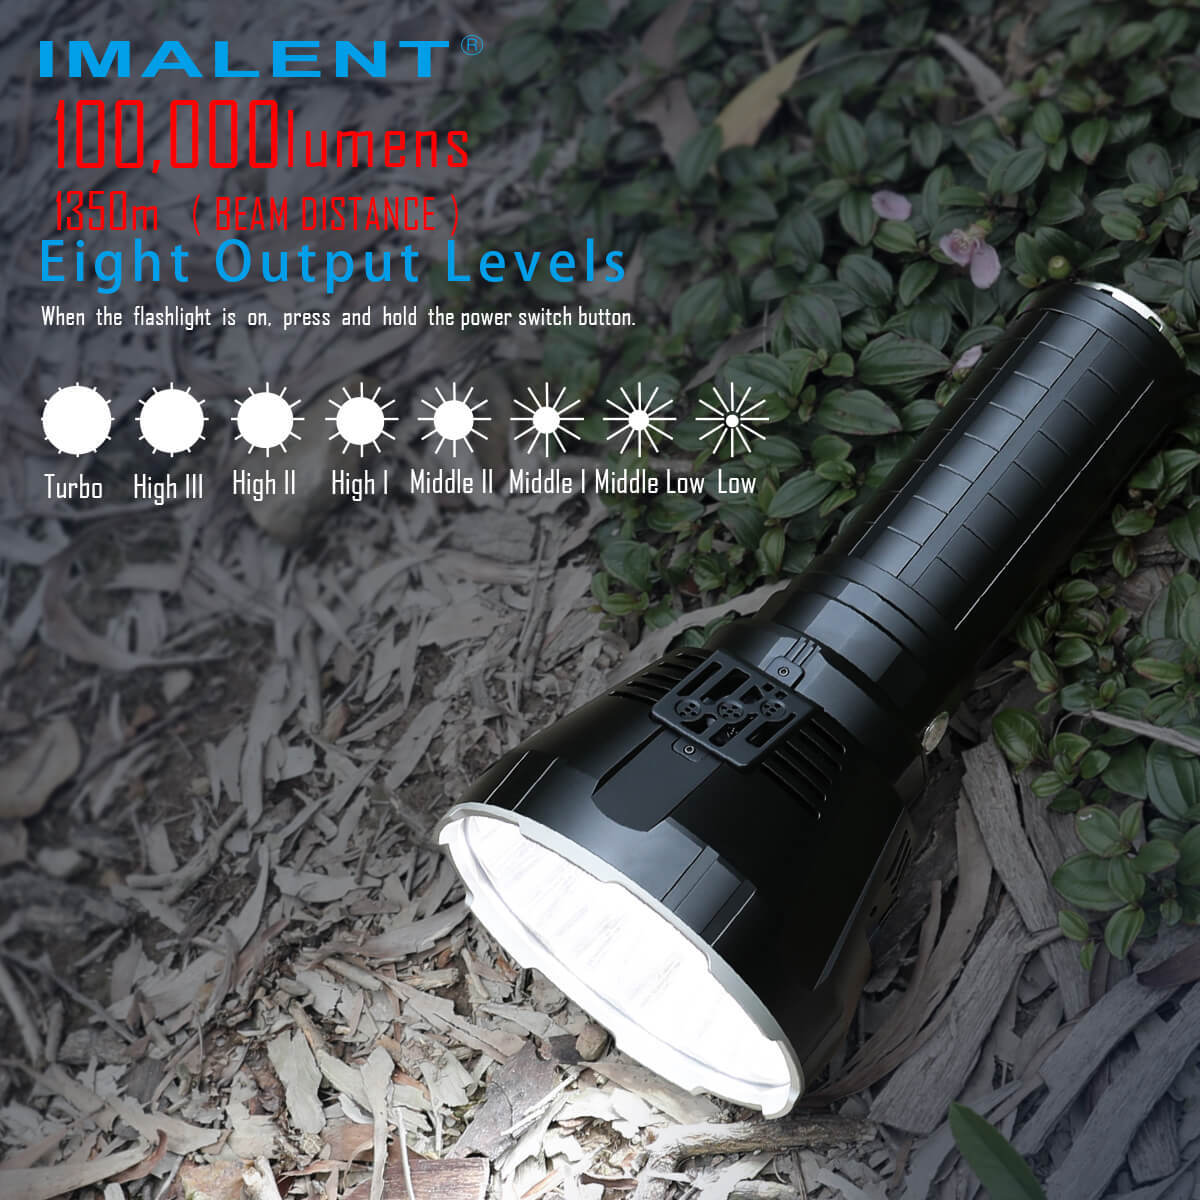 Imalent MS18 18 x CREE XHP70.2 100,000 Lumens Search Flashlight